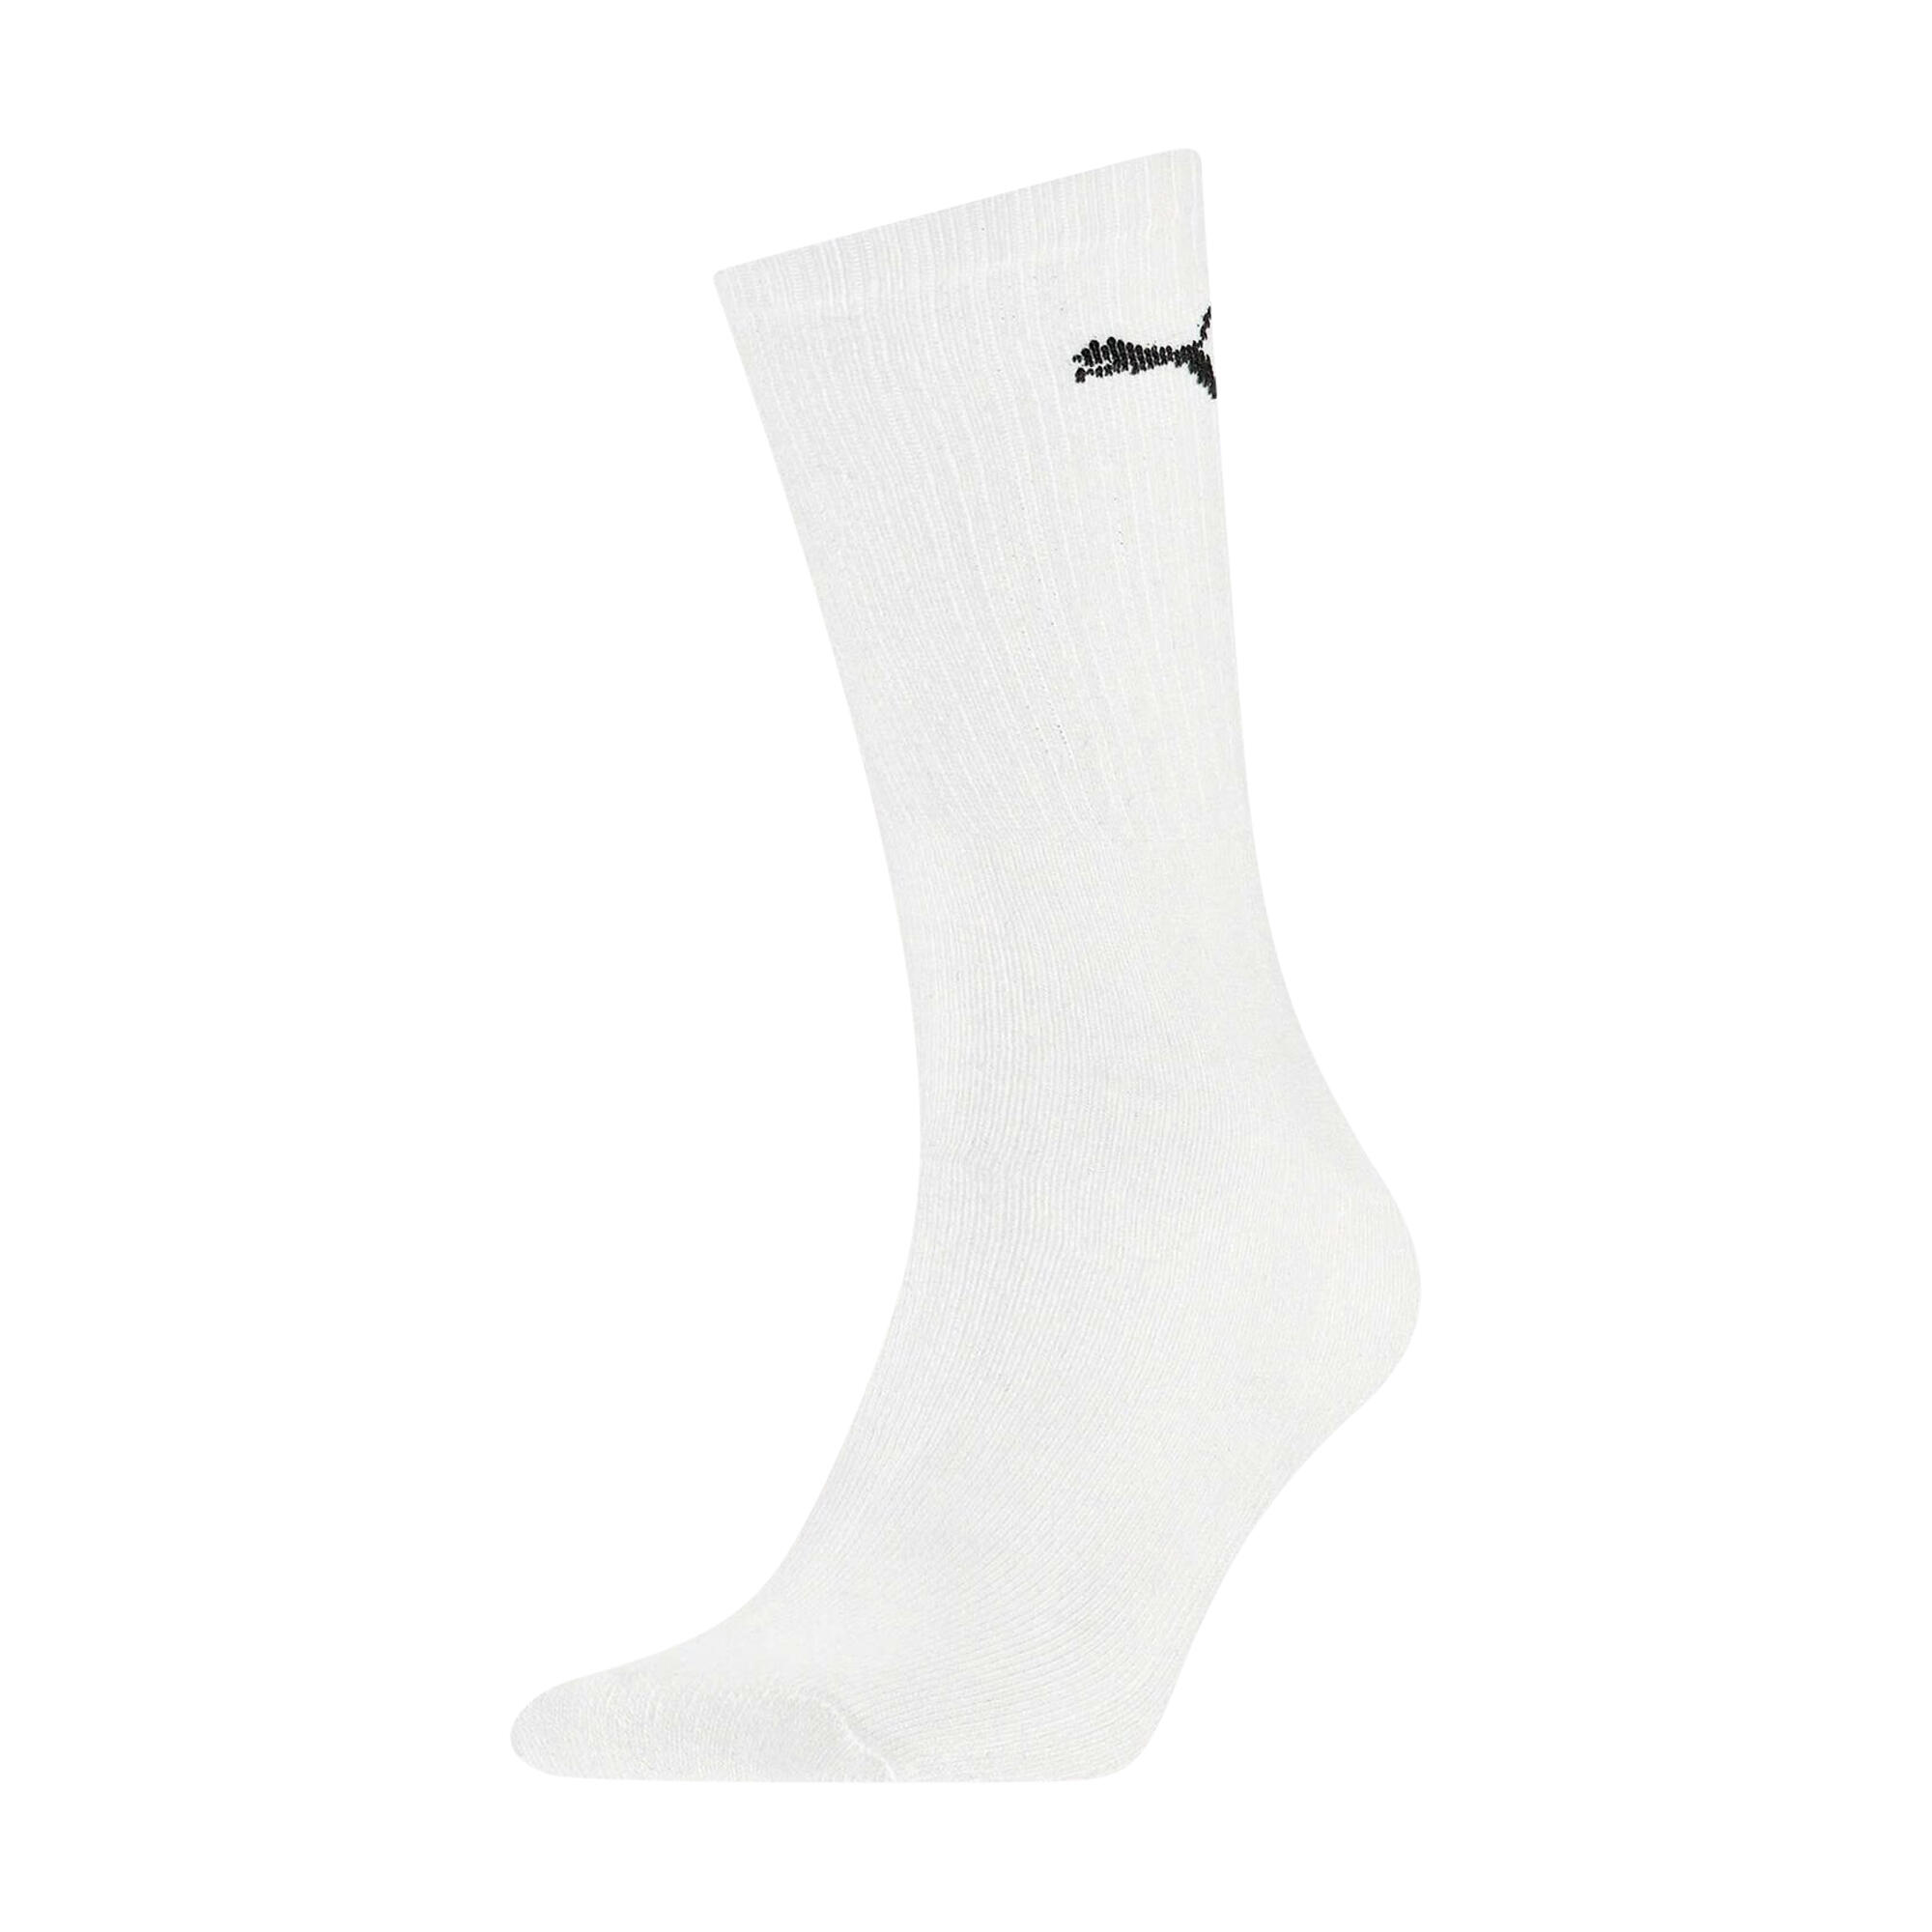 PUMA Unisex Adult Crew Sports Socks (Pack of 3) (White)